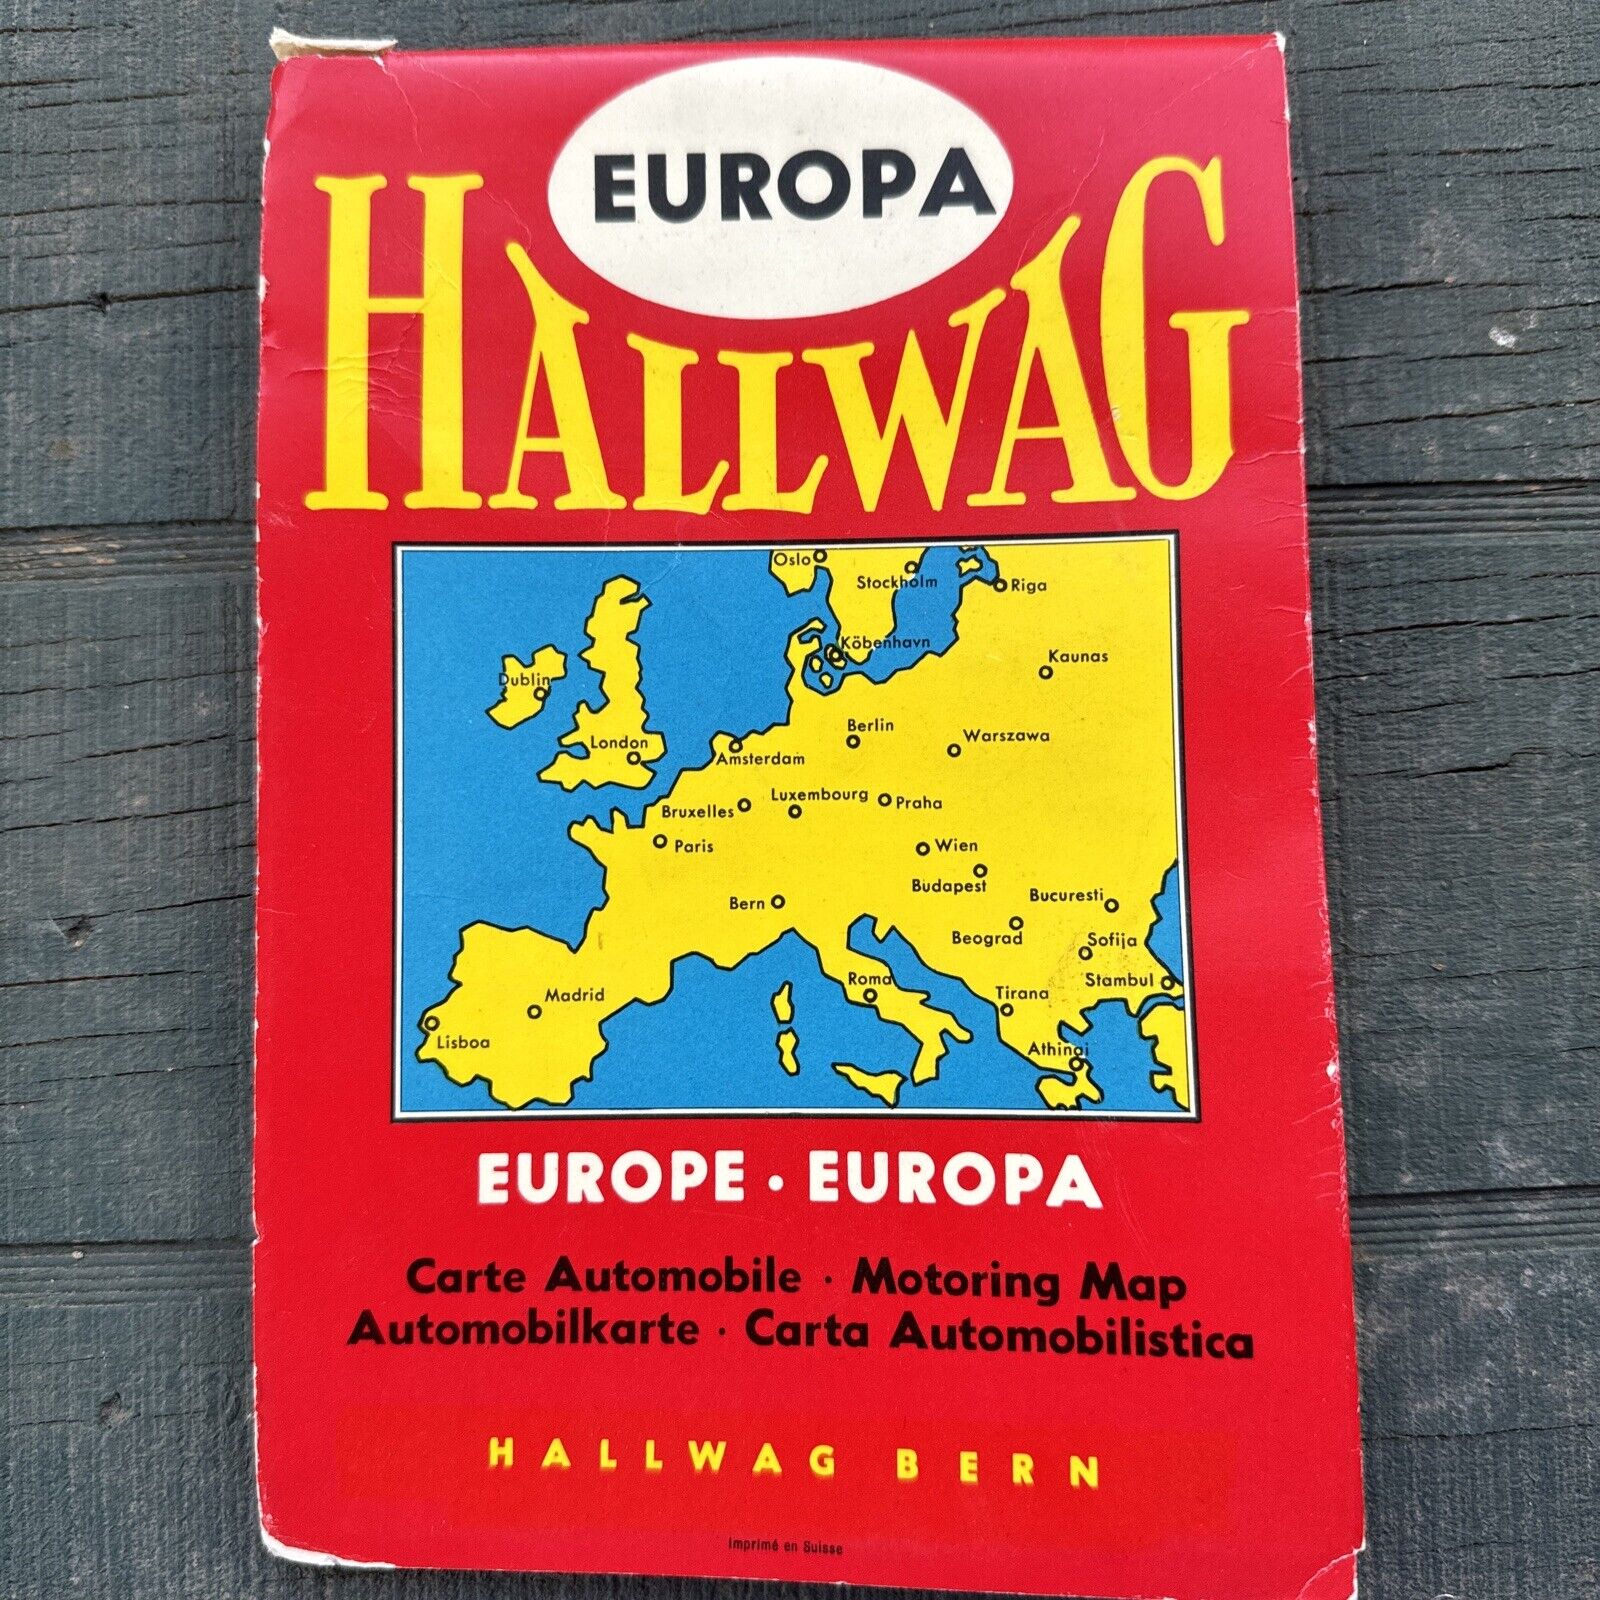 Vintage Europa Hallwag Berne Motoring Map Printed In Switzerland